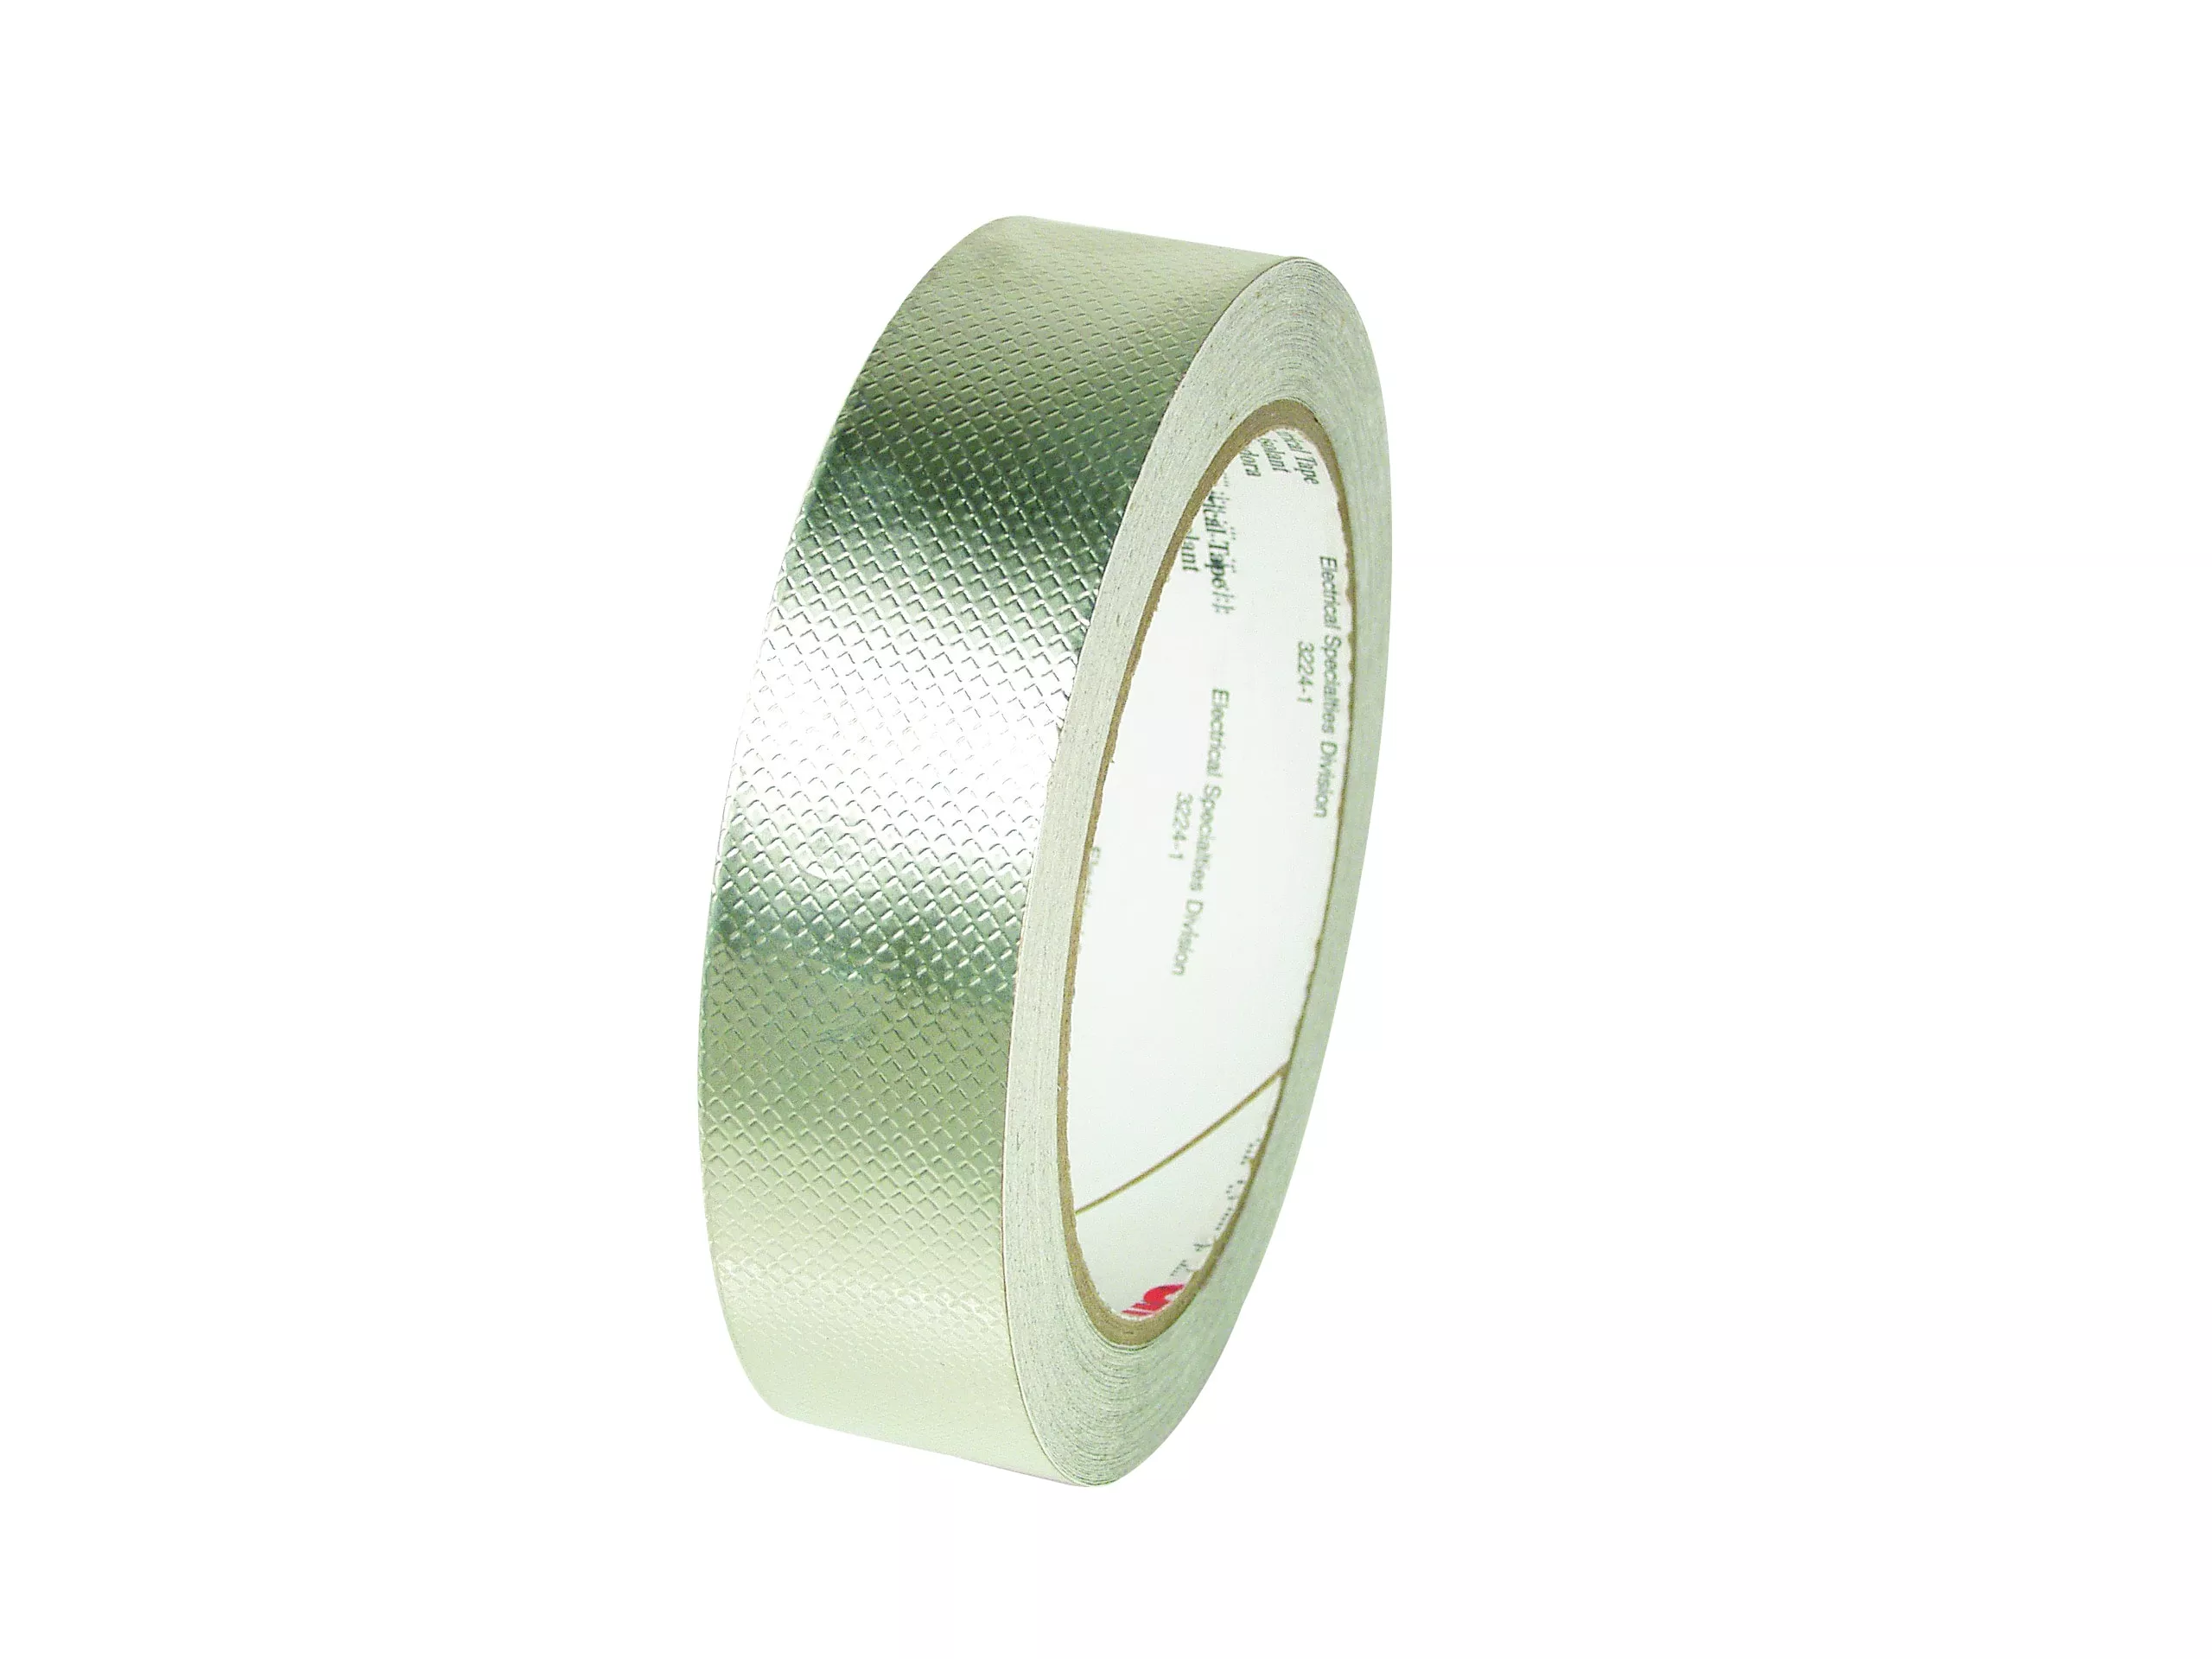 3M™ Embossed Tin-Plated Copper Foil EMI Shielding Tape 1345, 6 in x 18
yd, 3 in Paper Core, 2 Rolls/Case